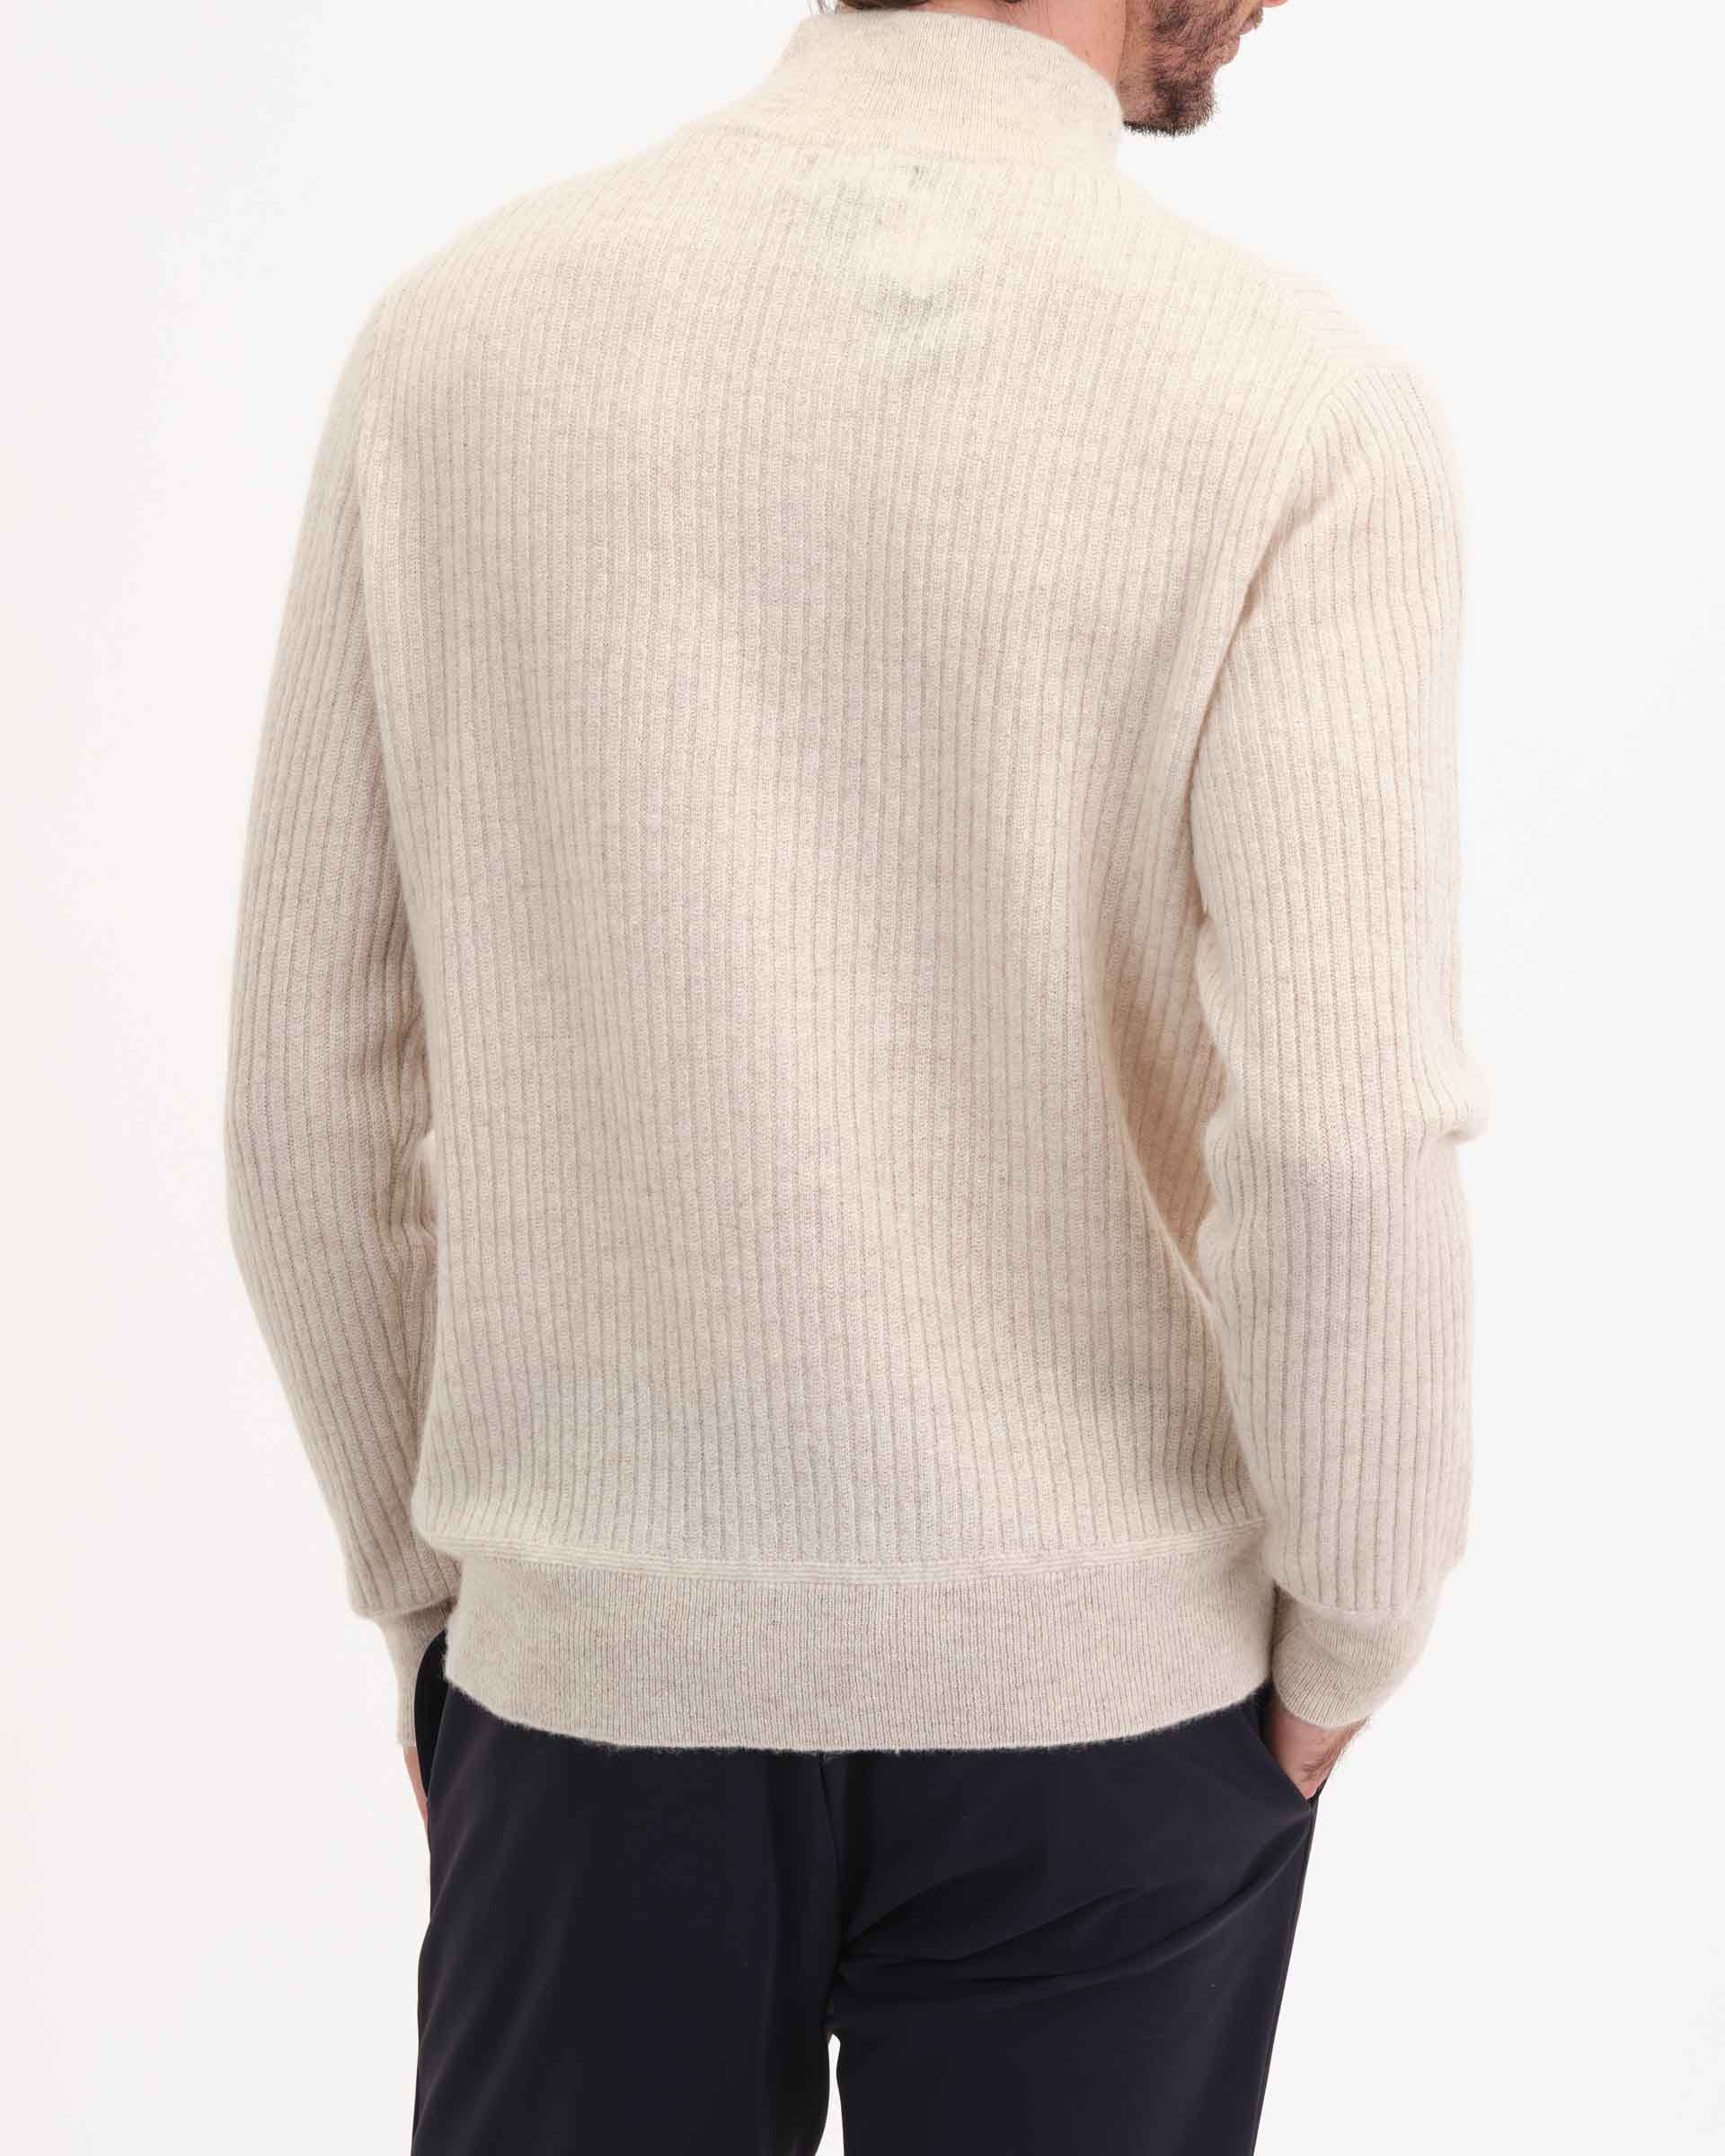 Shop Men's Cashmere Rib Half Zip Pullover Sweater | Magaschoni Men's | JANE + MERCER